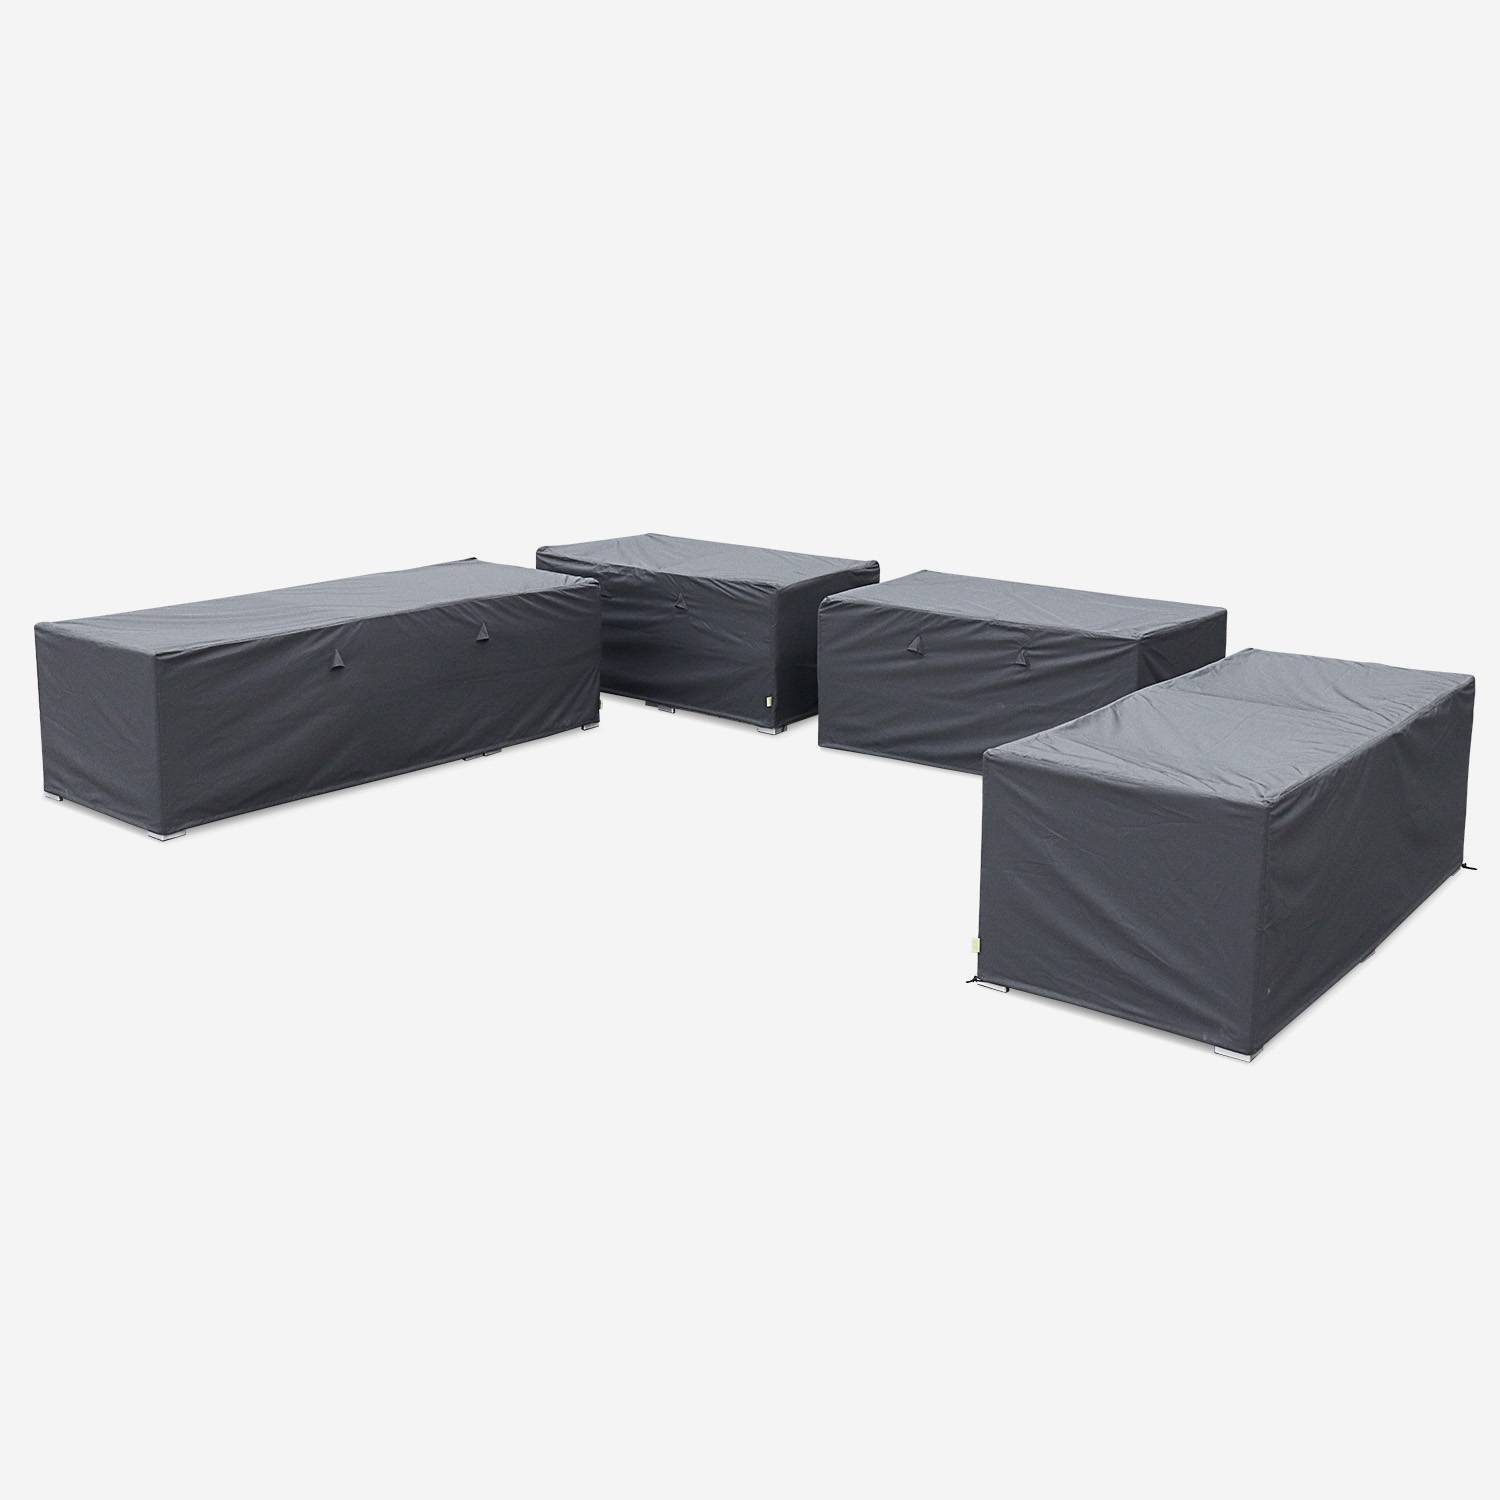 Protective covers for Tripoli & Verona garden furniture set, dark grey. Water-resistant, polyamide coating Photo1